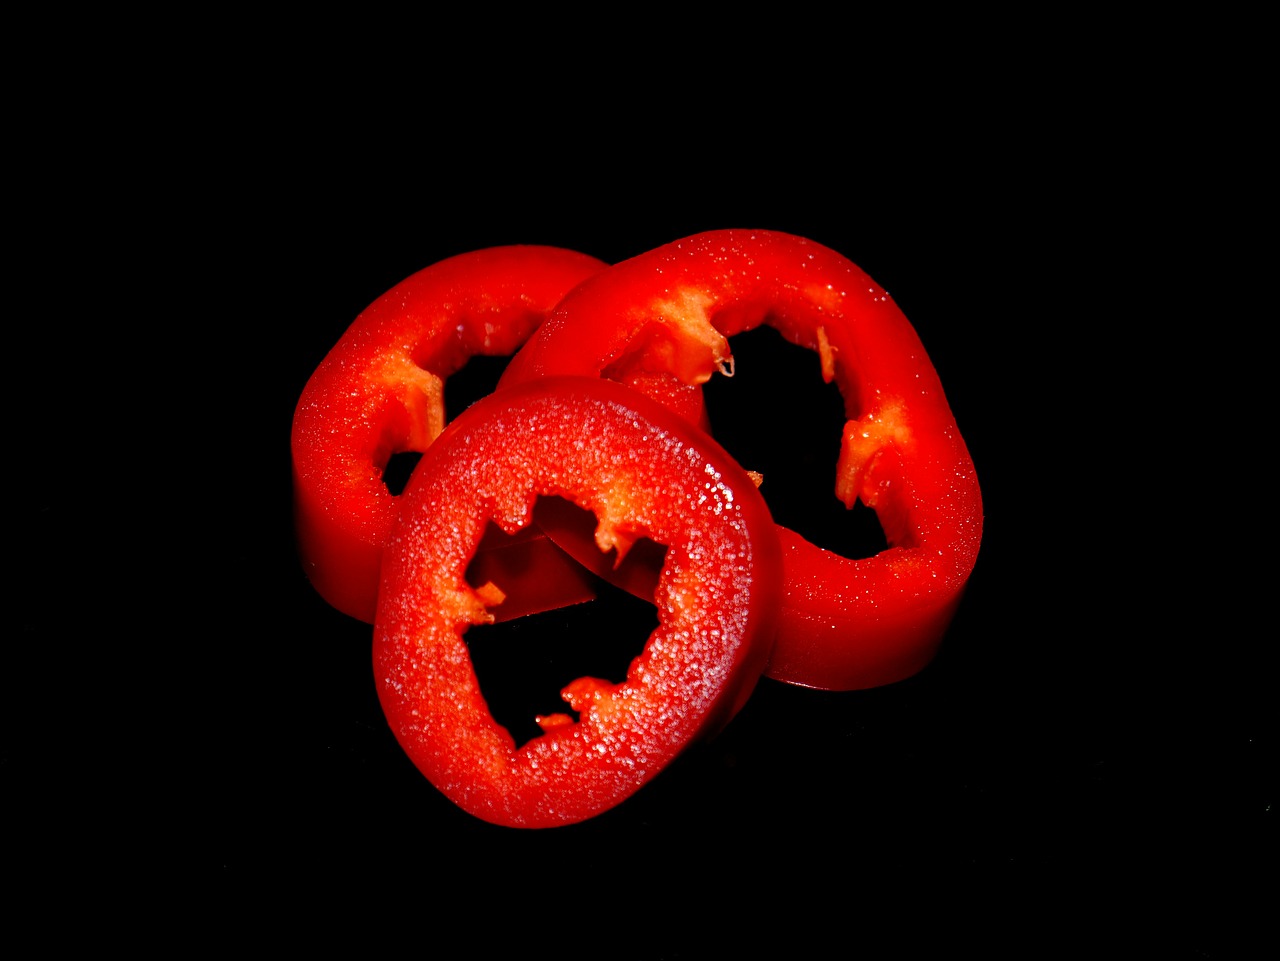 paprika pepperoni red free photo